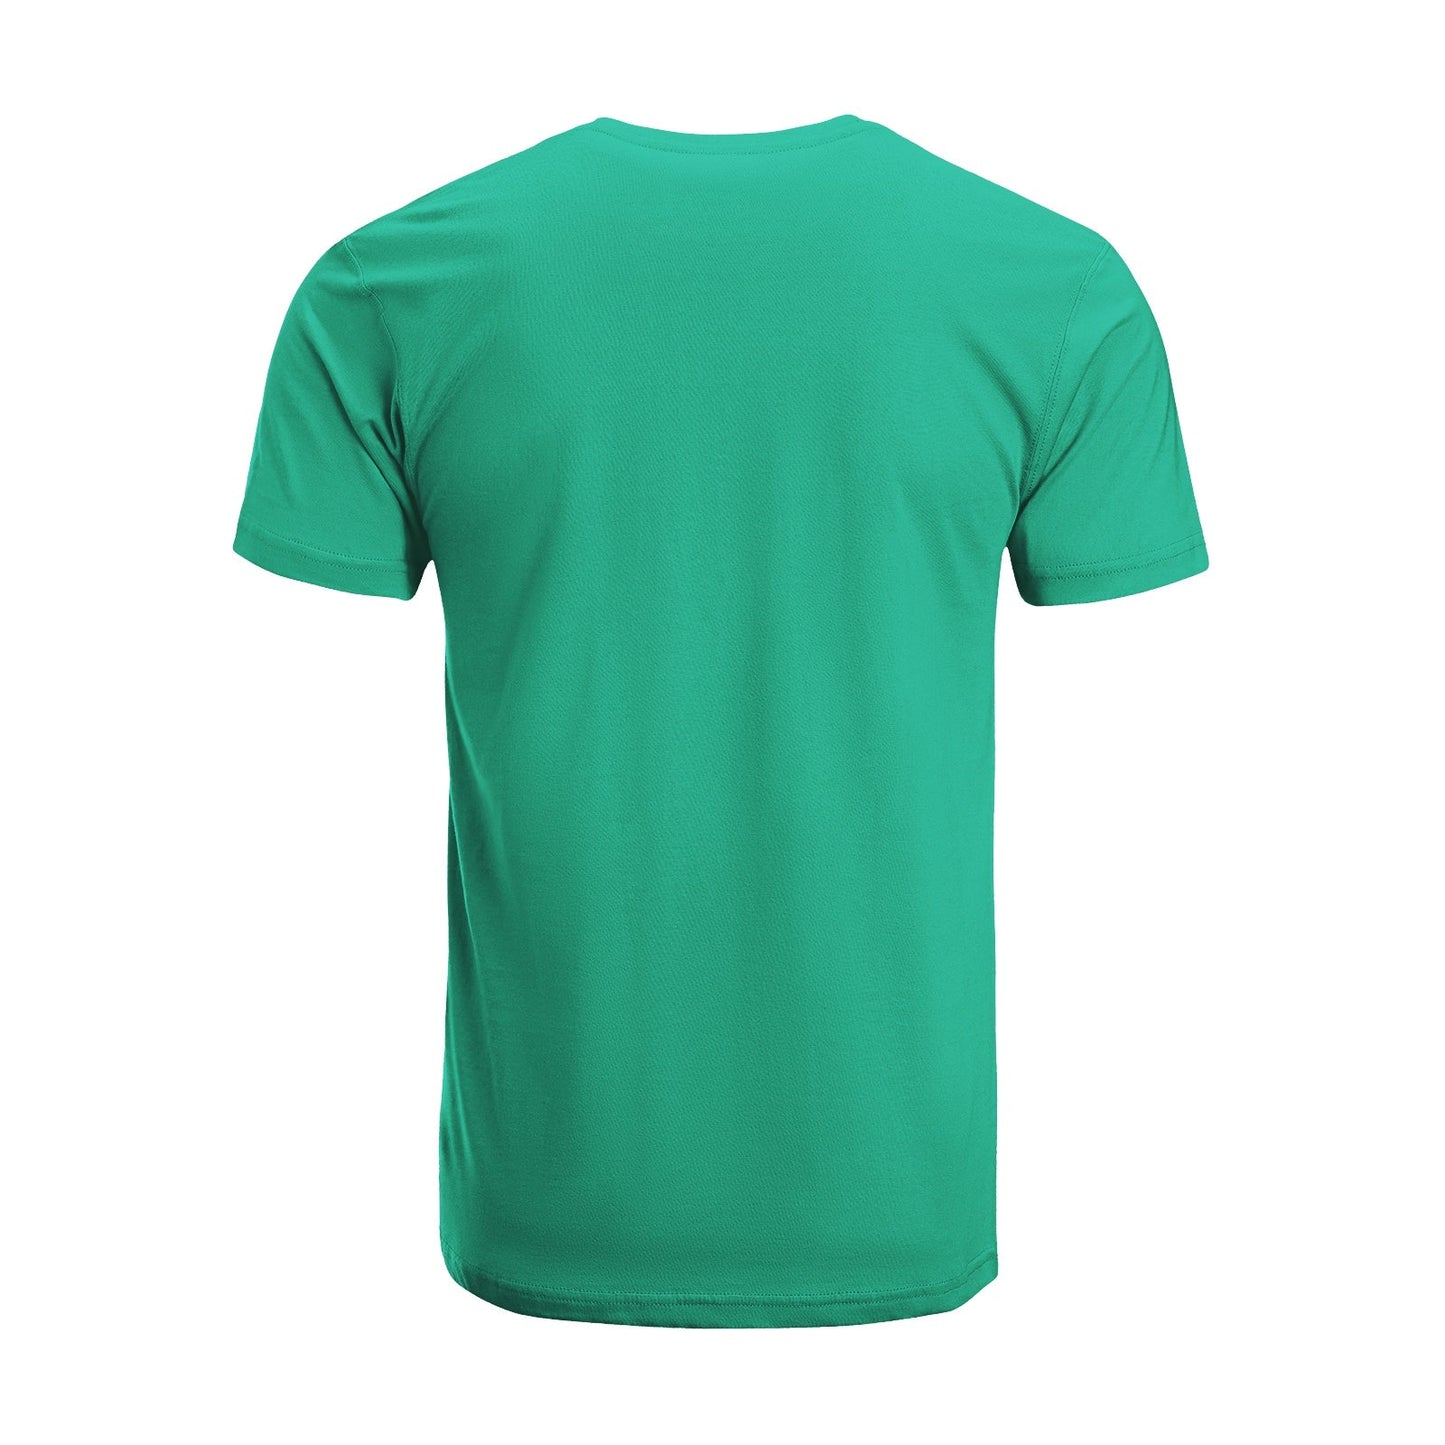 Unisex Short Sleeve Crew Neck Cotton Jersey T-Shirt CAT 12 - Tara-Outfits.com